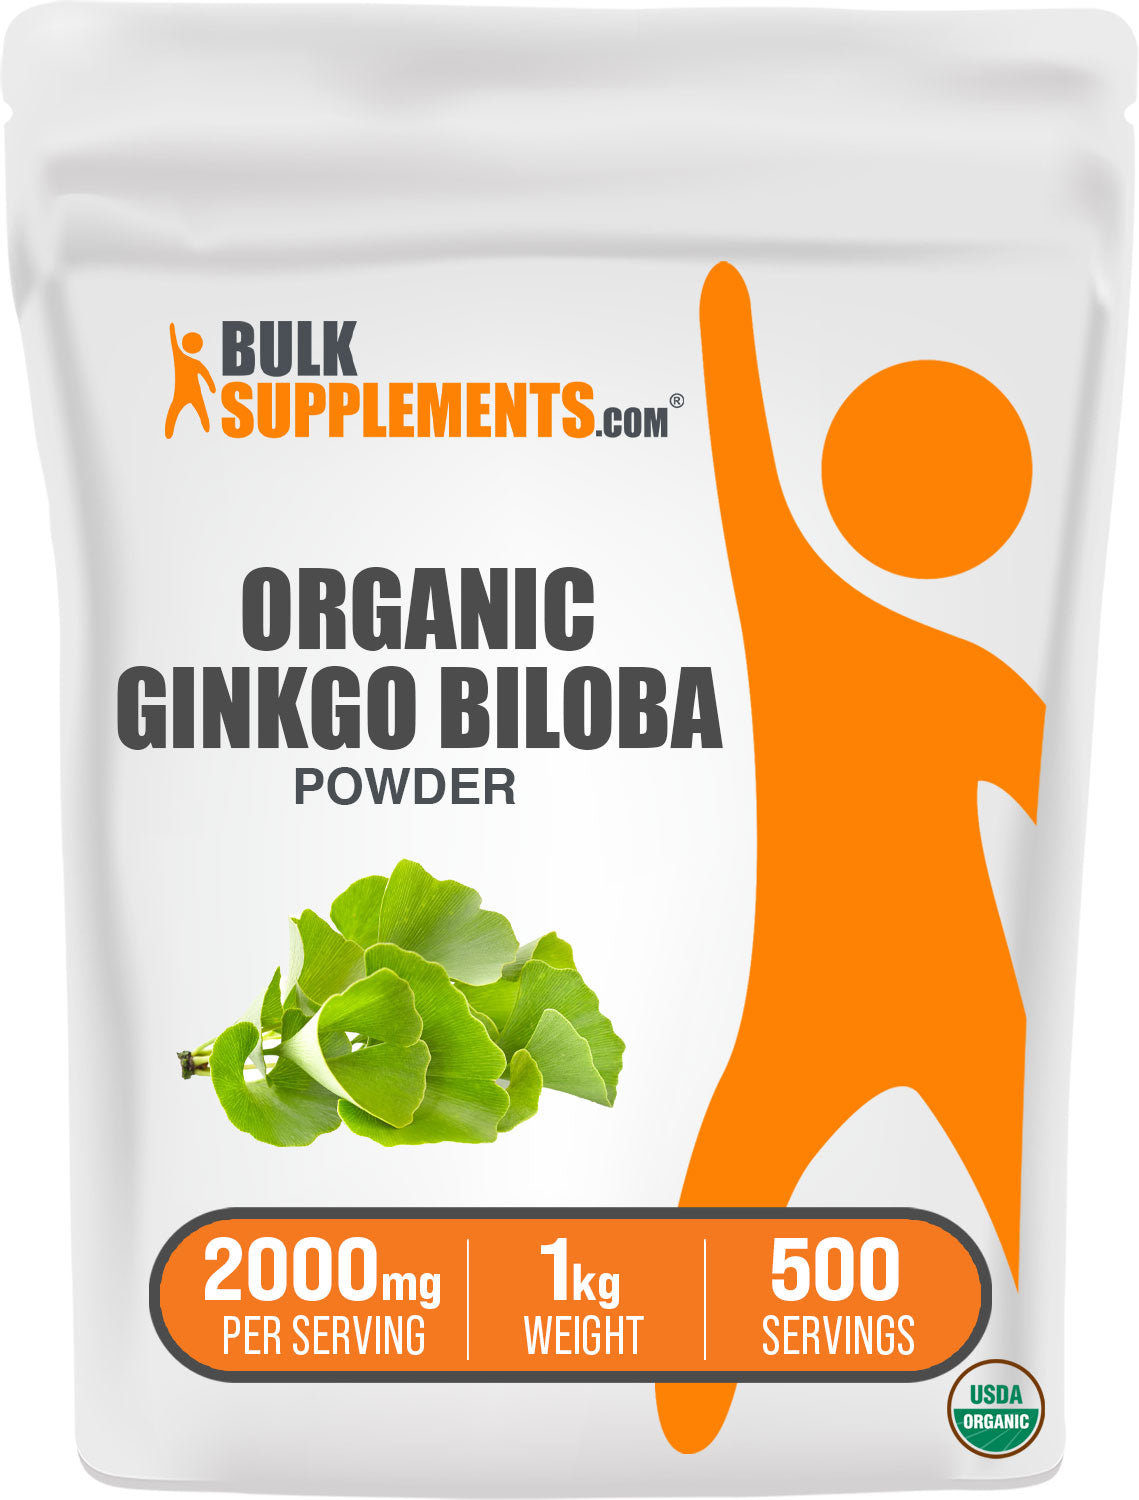 BulkSupplements Organic Ginkgo Biloba Powder 1kg bag